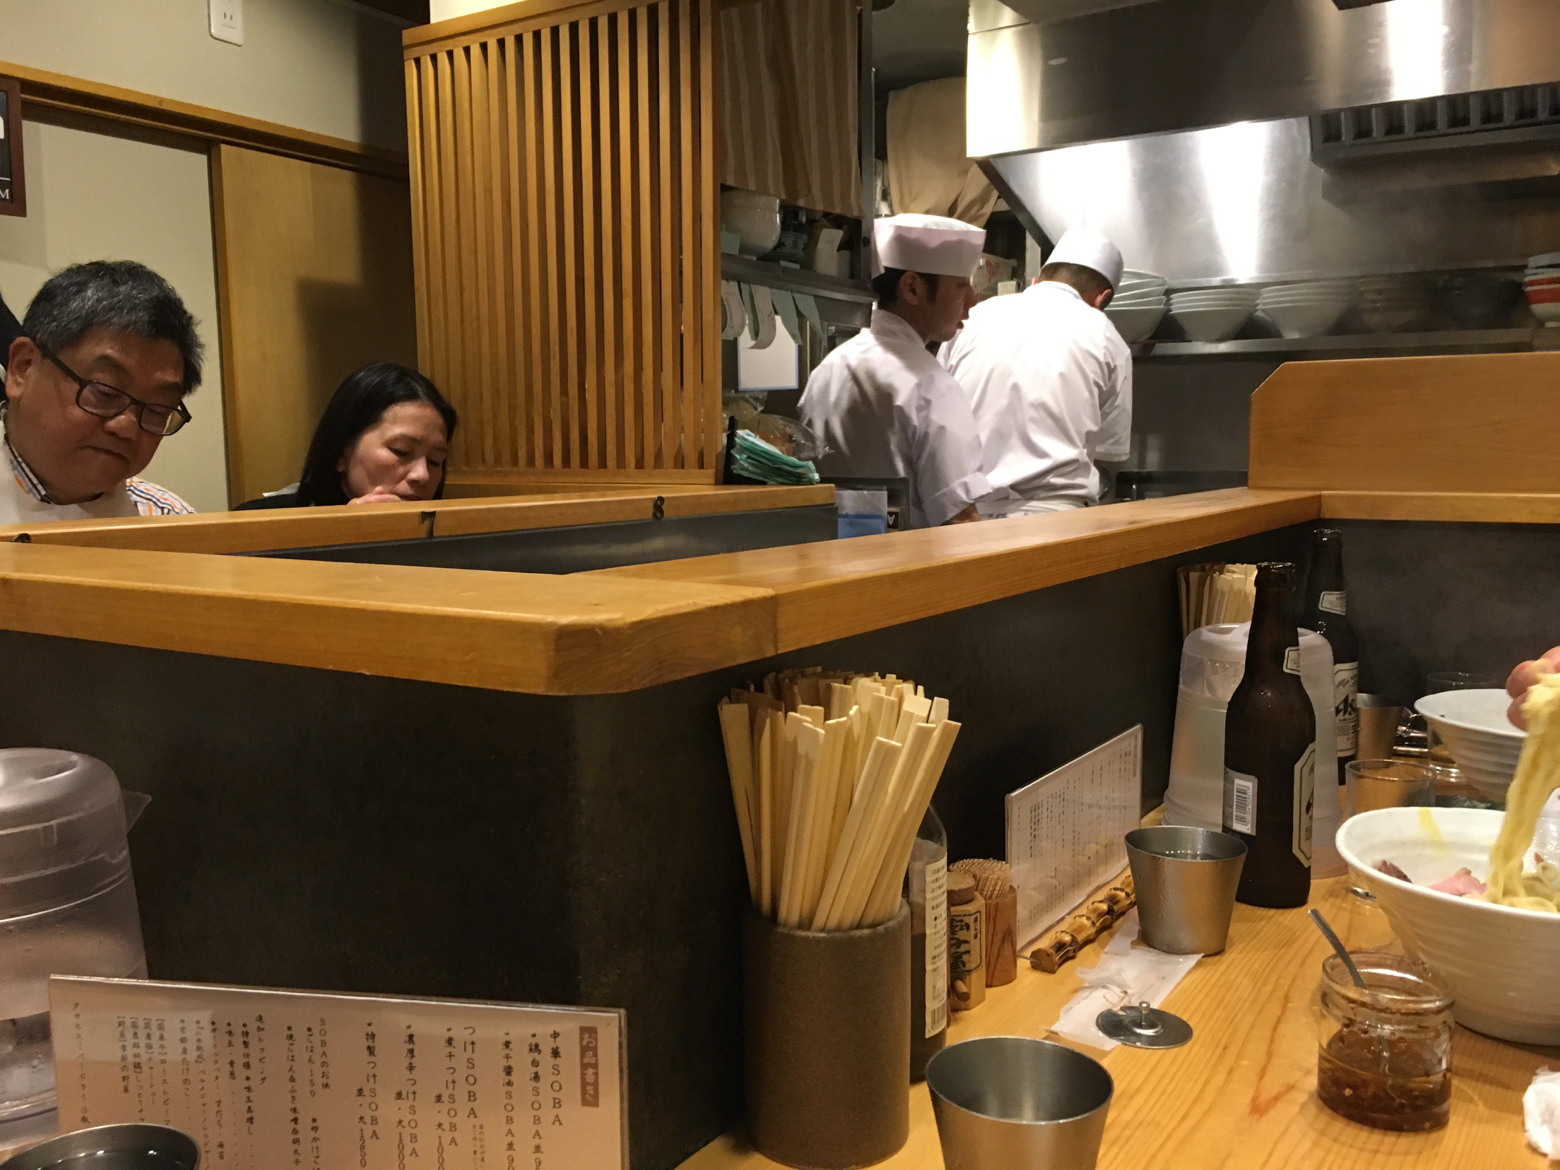 Traveling Tokyo and Kyoto, omakase sushi dinner